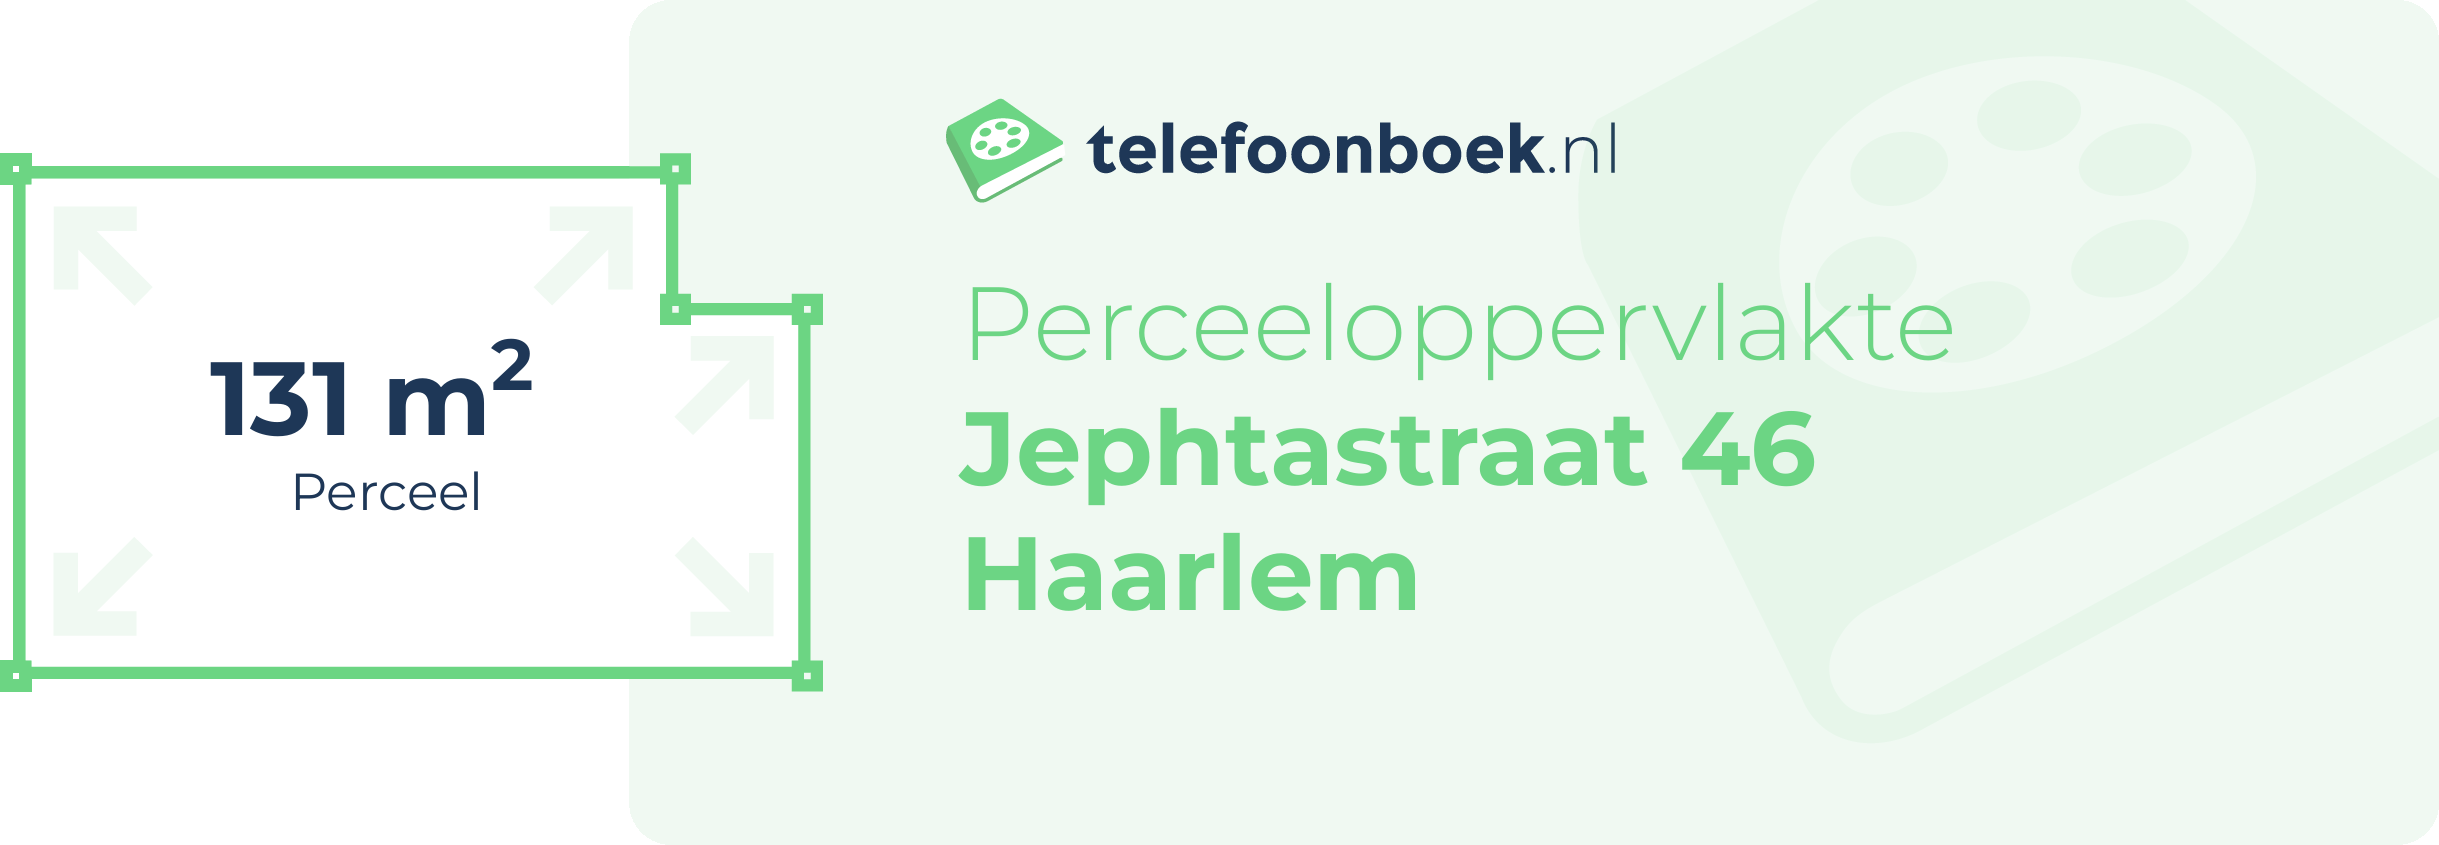 Perceeloppervlakte Jephtastraat 46 Haarlem